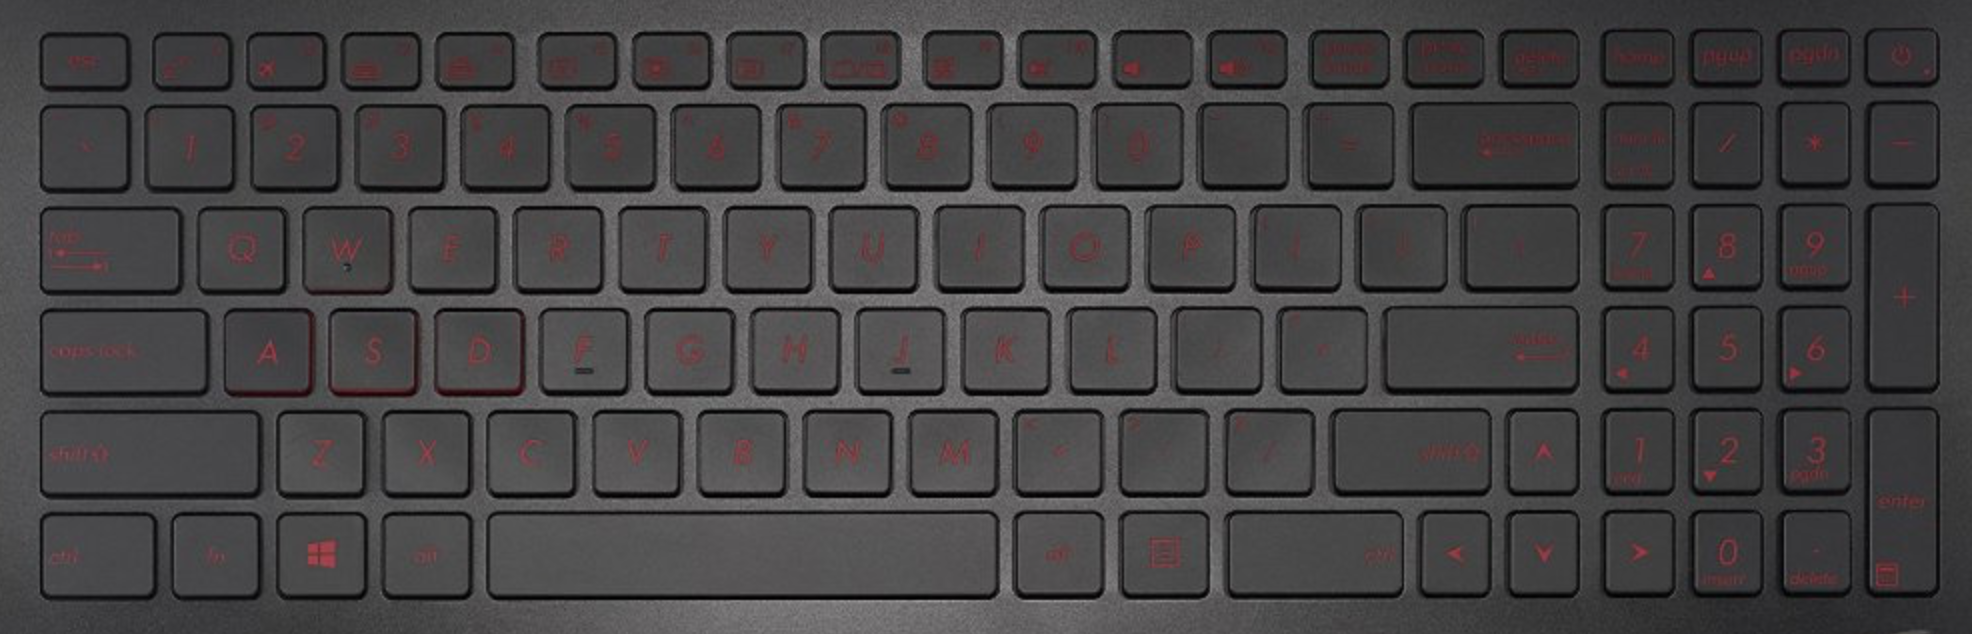 Asus FX502VD Keyboard Keys Replacement 